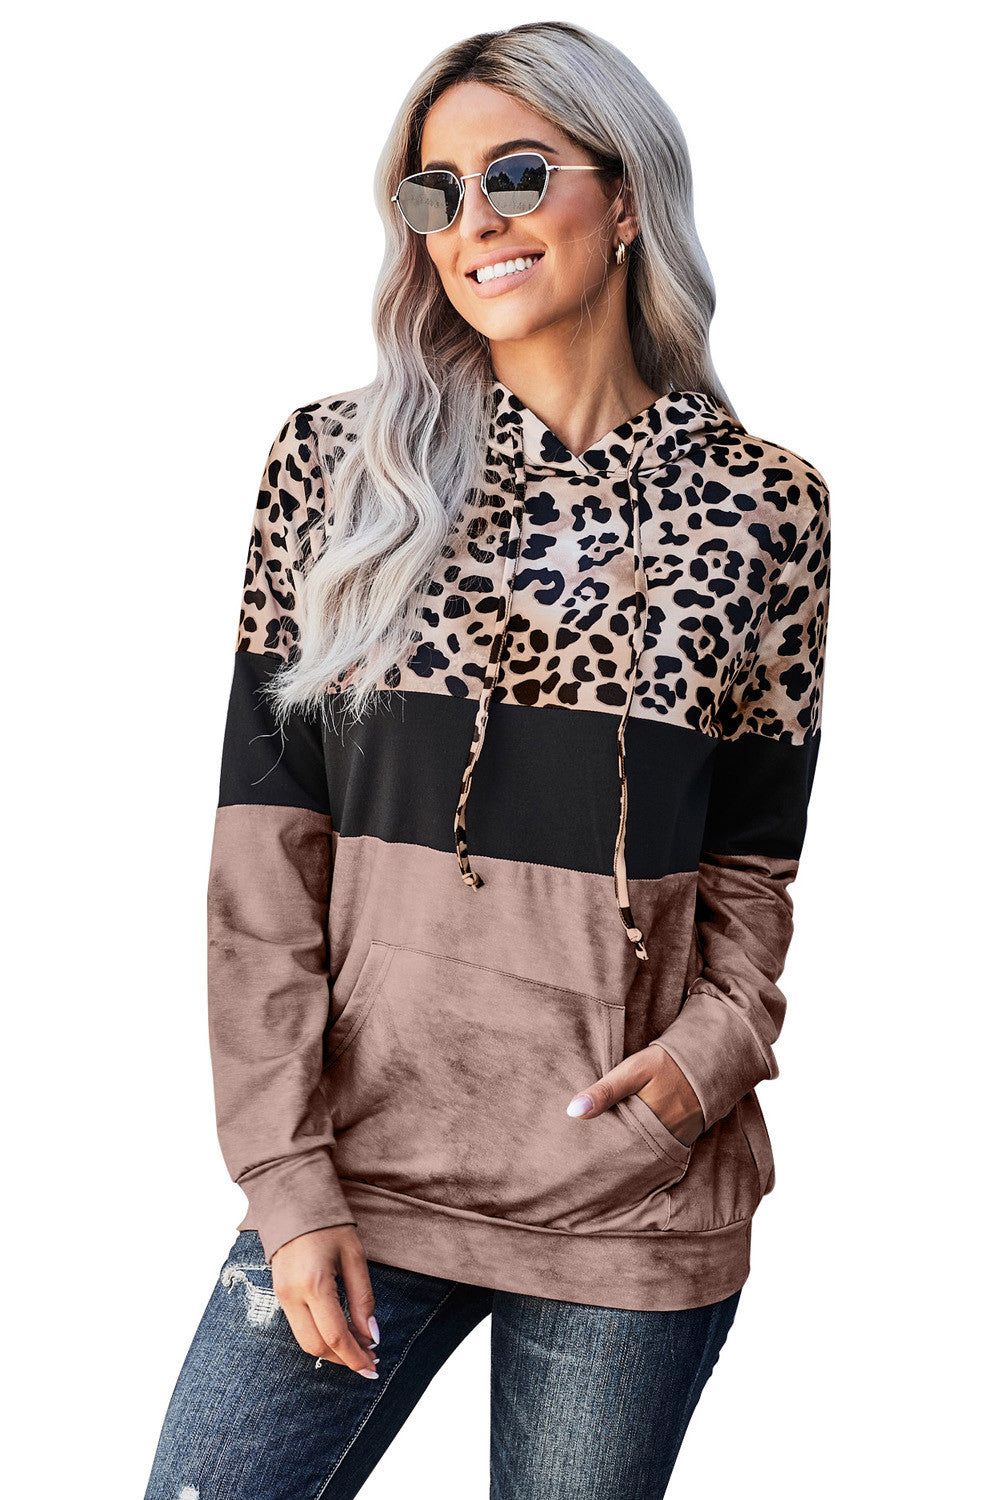 Cali Chic Juniors' Sweatshirt Hoodie Celebrity Brown Leopard Tie Dye Color Block